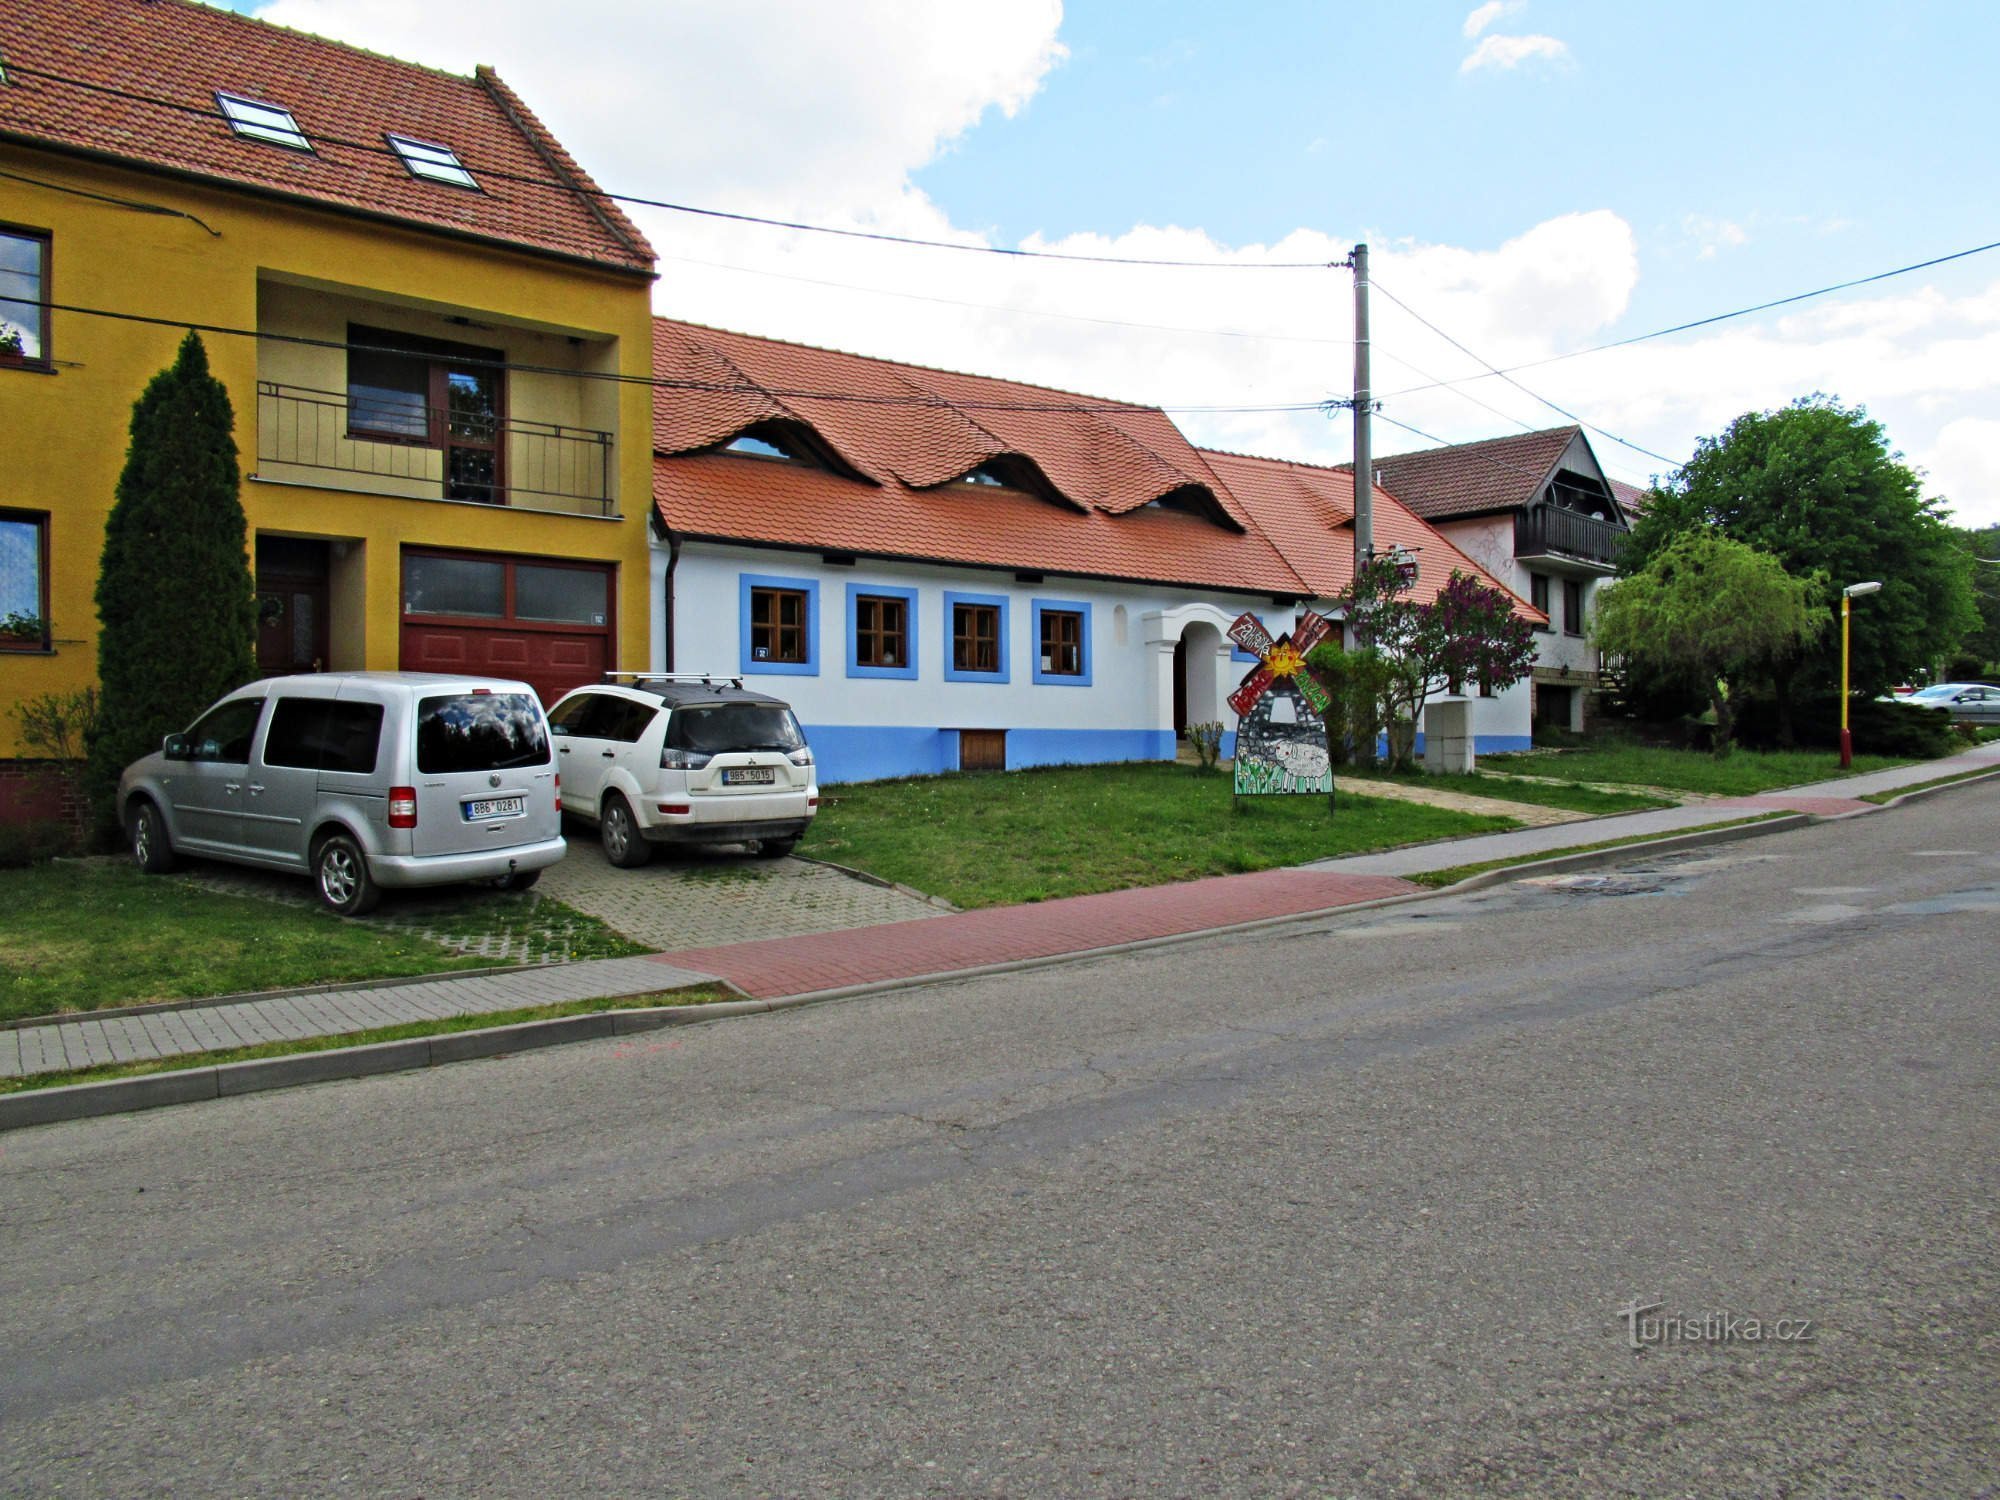 Pension U větrného mlýna in het dorp Kuželov in Slovácko